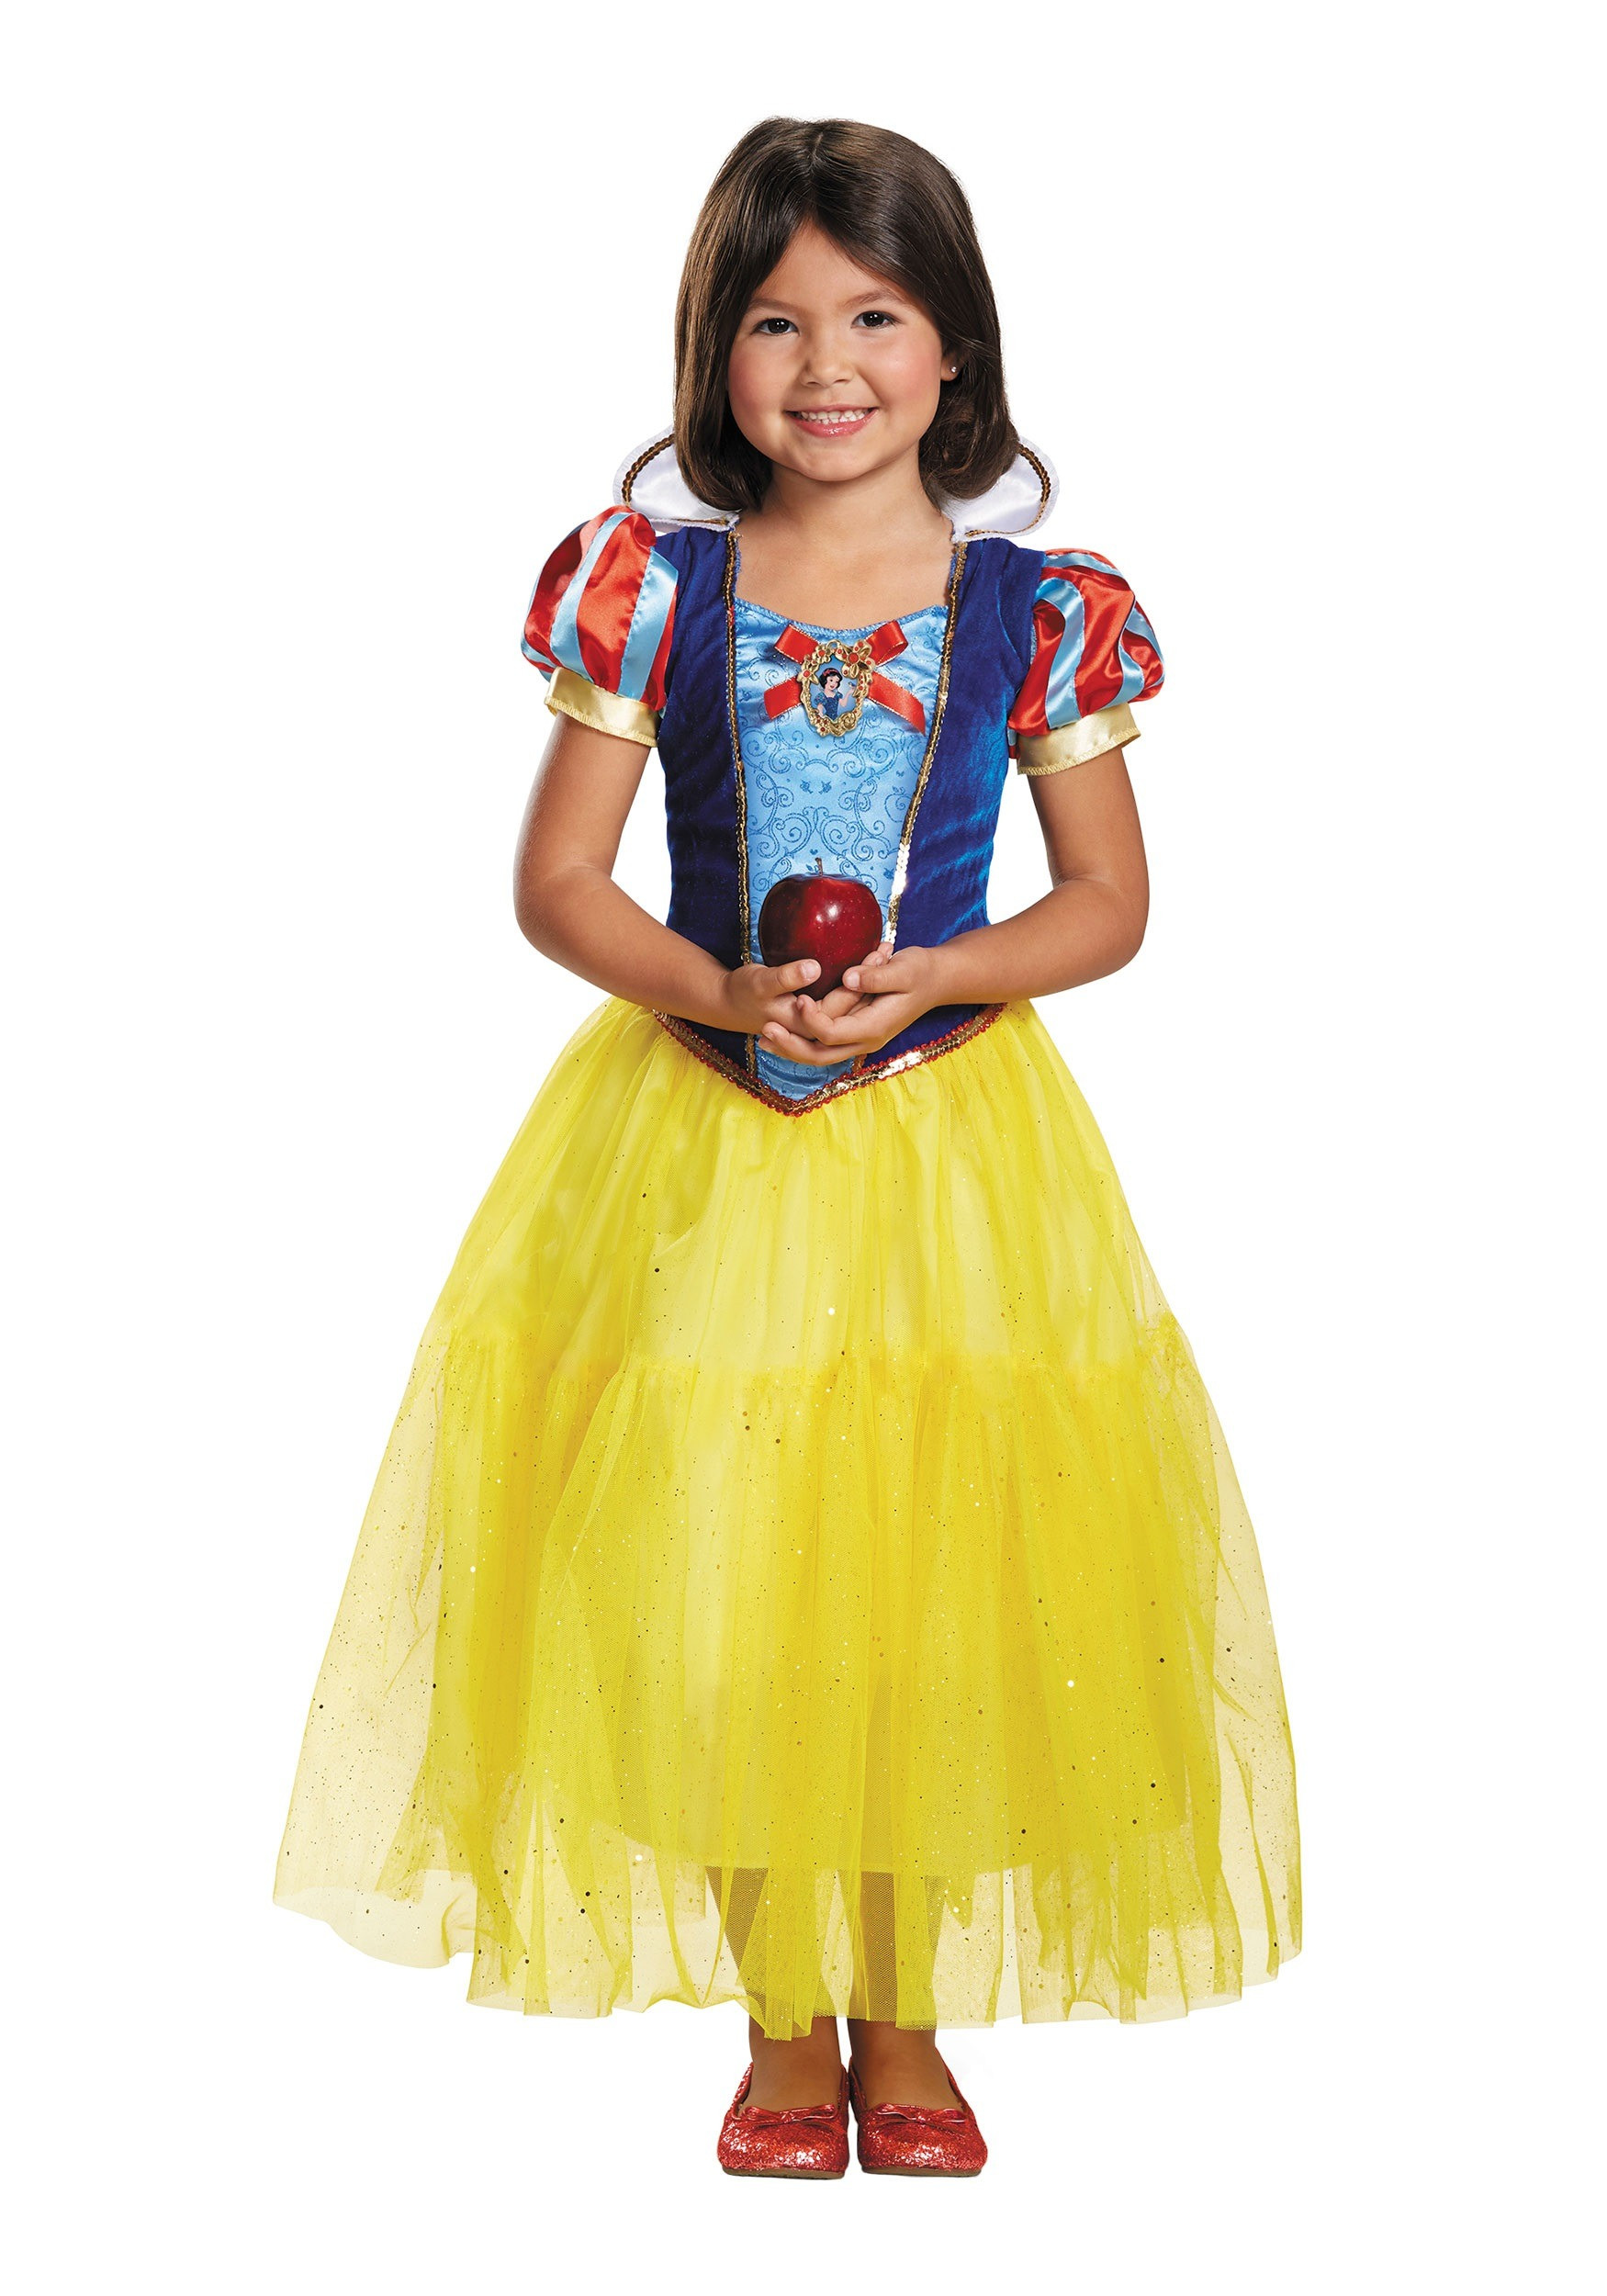 DIY Snow White Costume Toddler
 Child Snow White Deluxe Costume